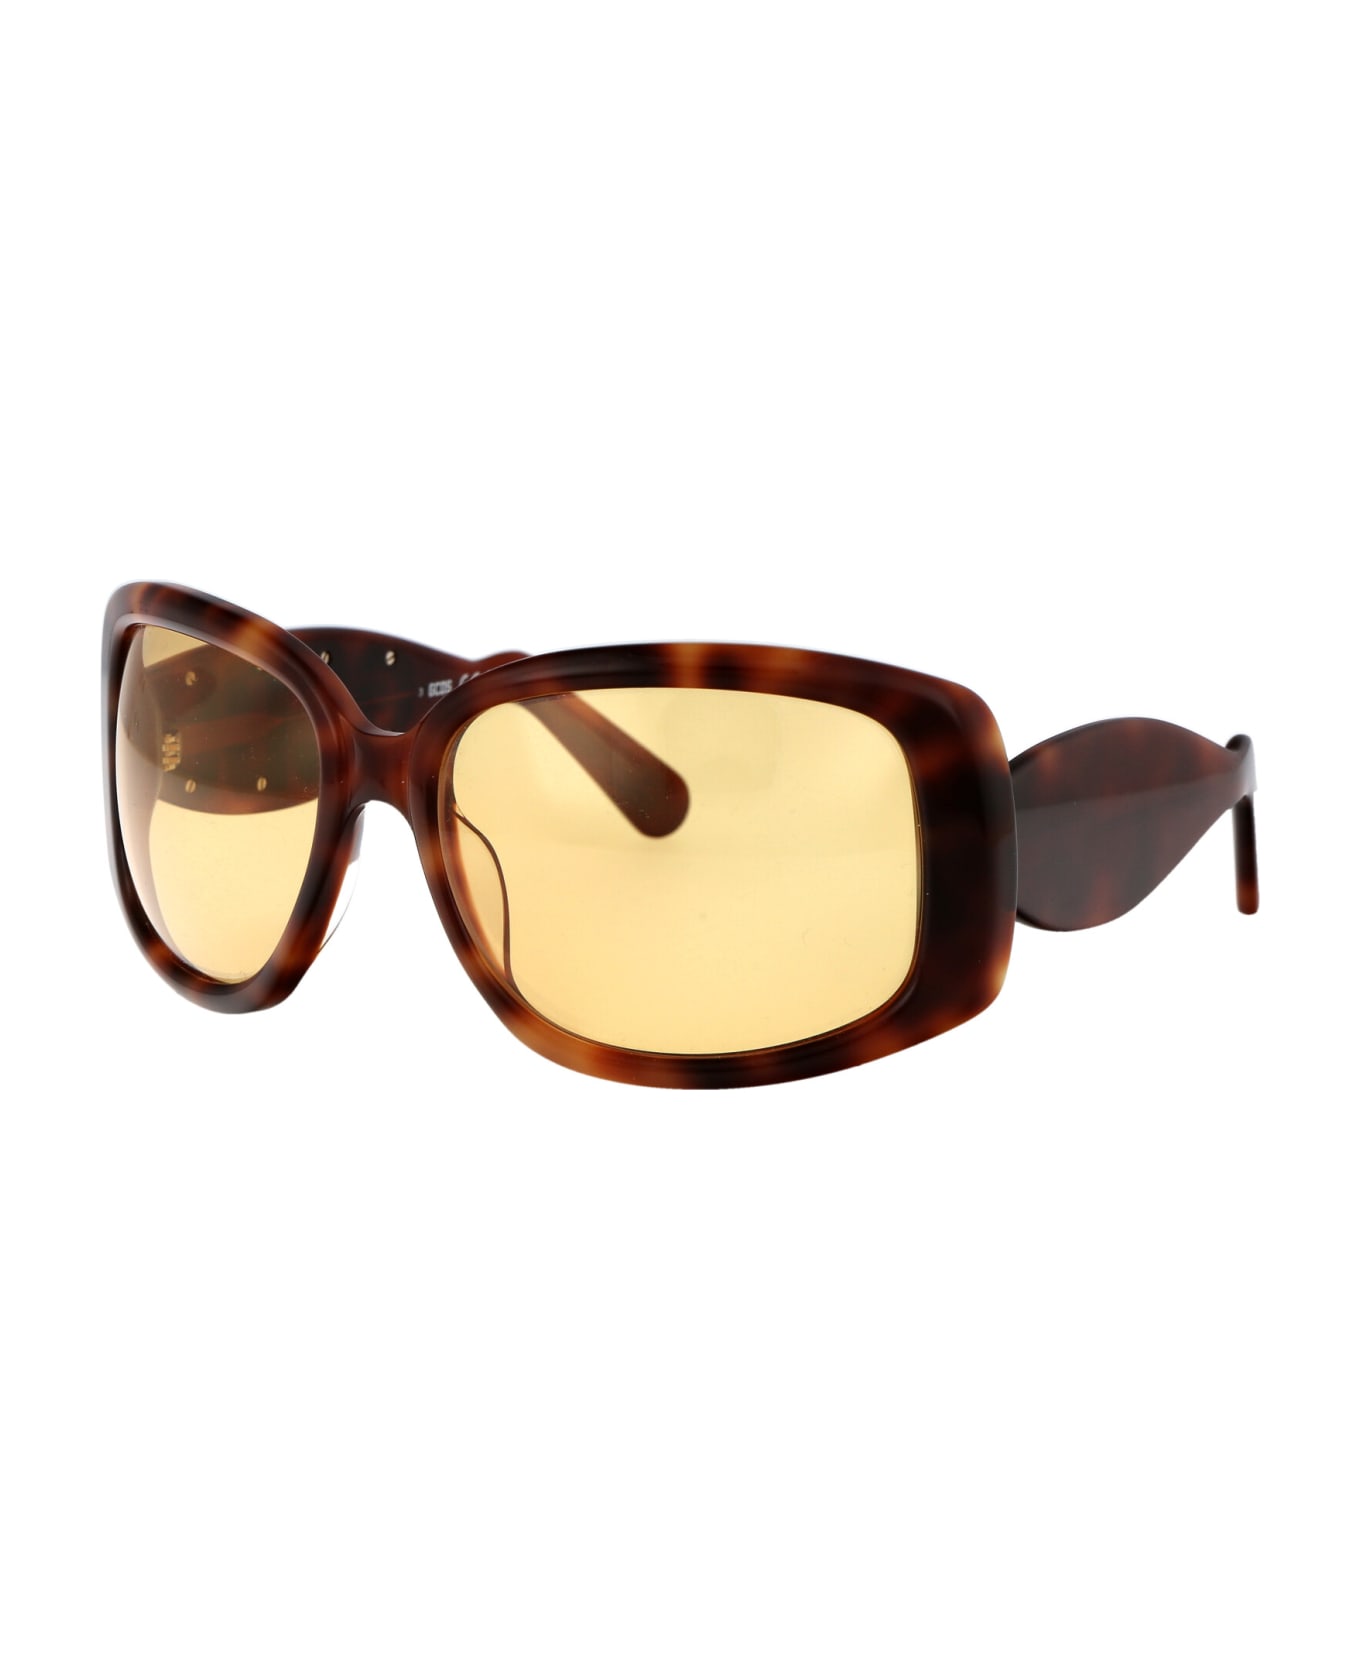 GCDS Gd0030 Sunglasses - 53E Avana Bionda/Marrone